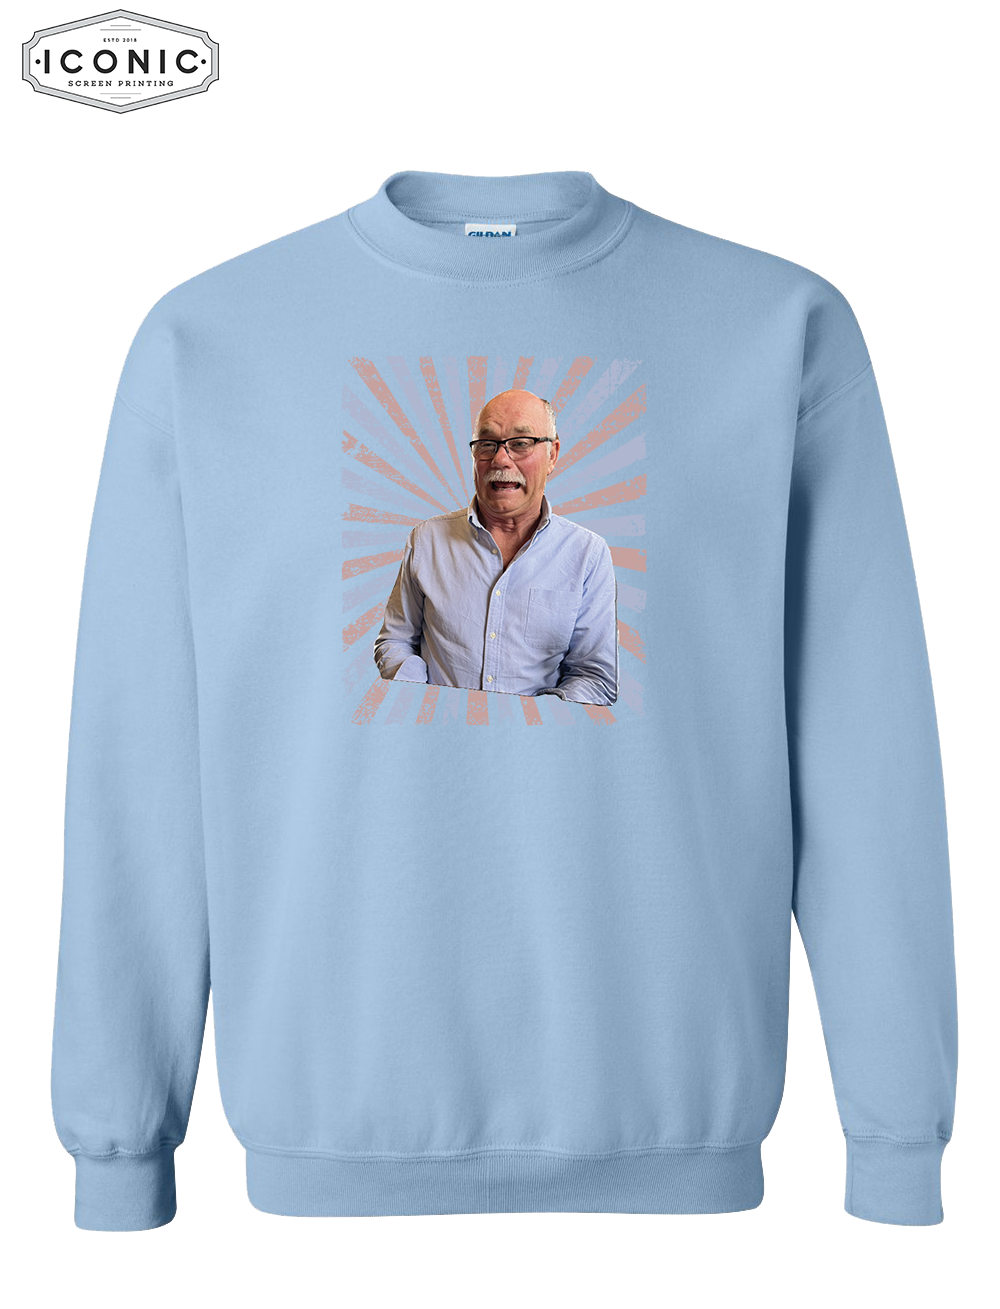 Daily Dave Heavy Blend Sweatshirt